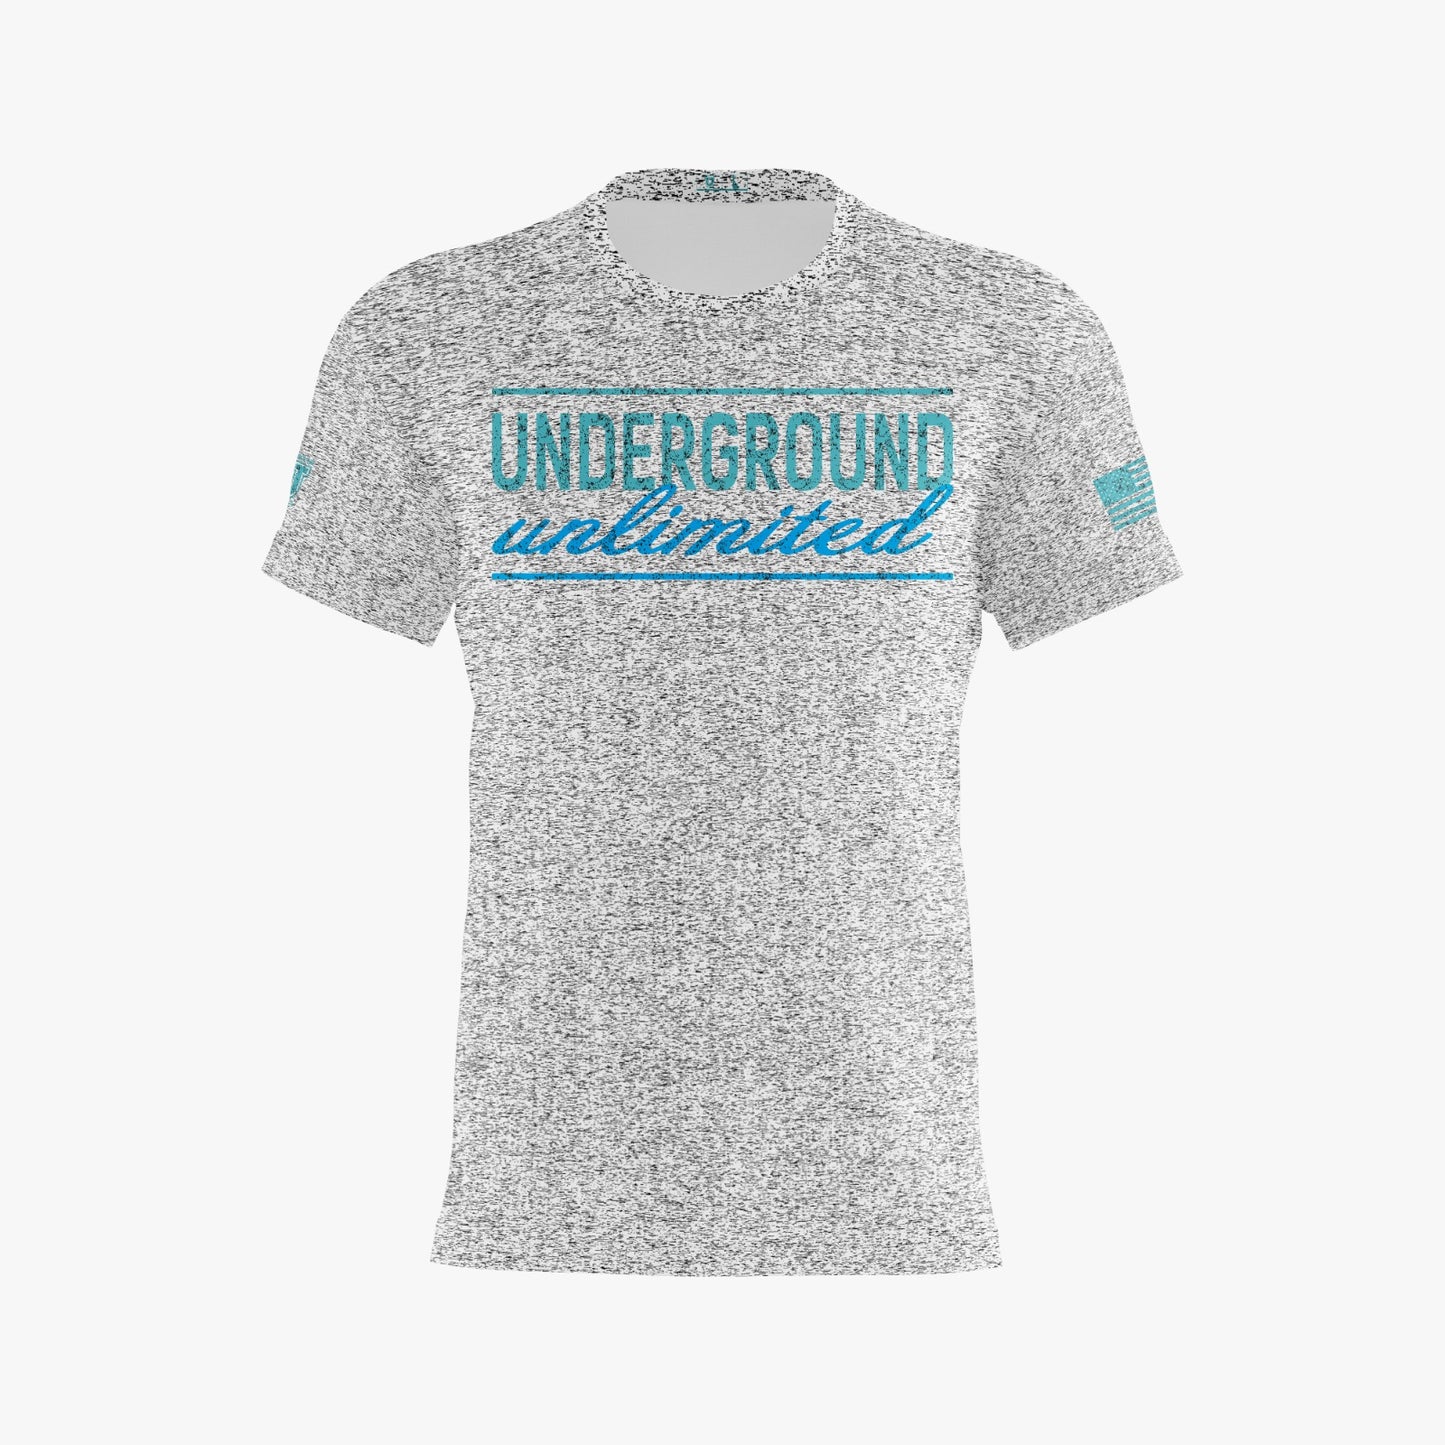 Underground Unlimited Performance Dri Tech Design ~ Heathered Grey